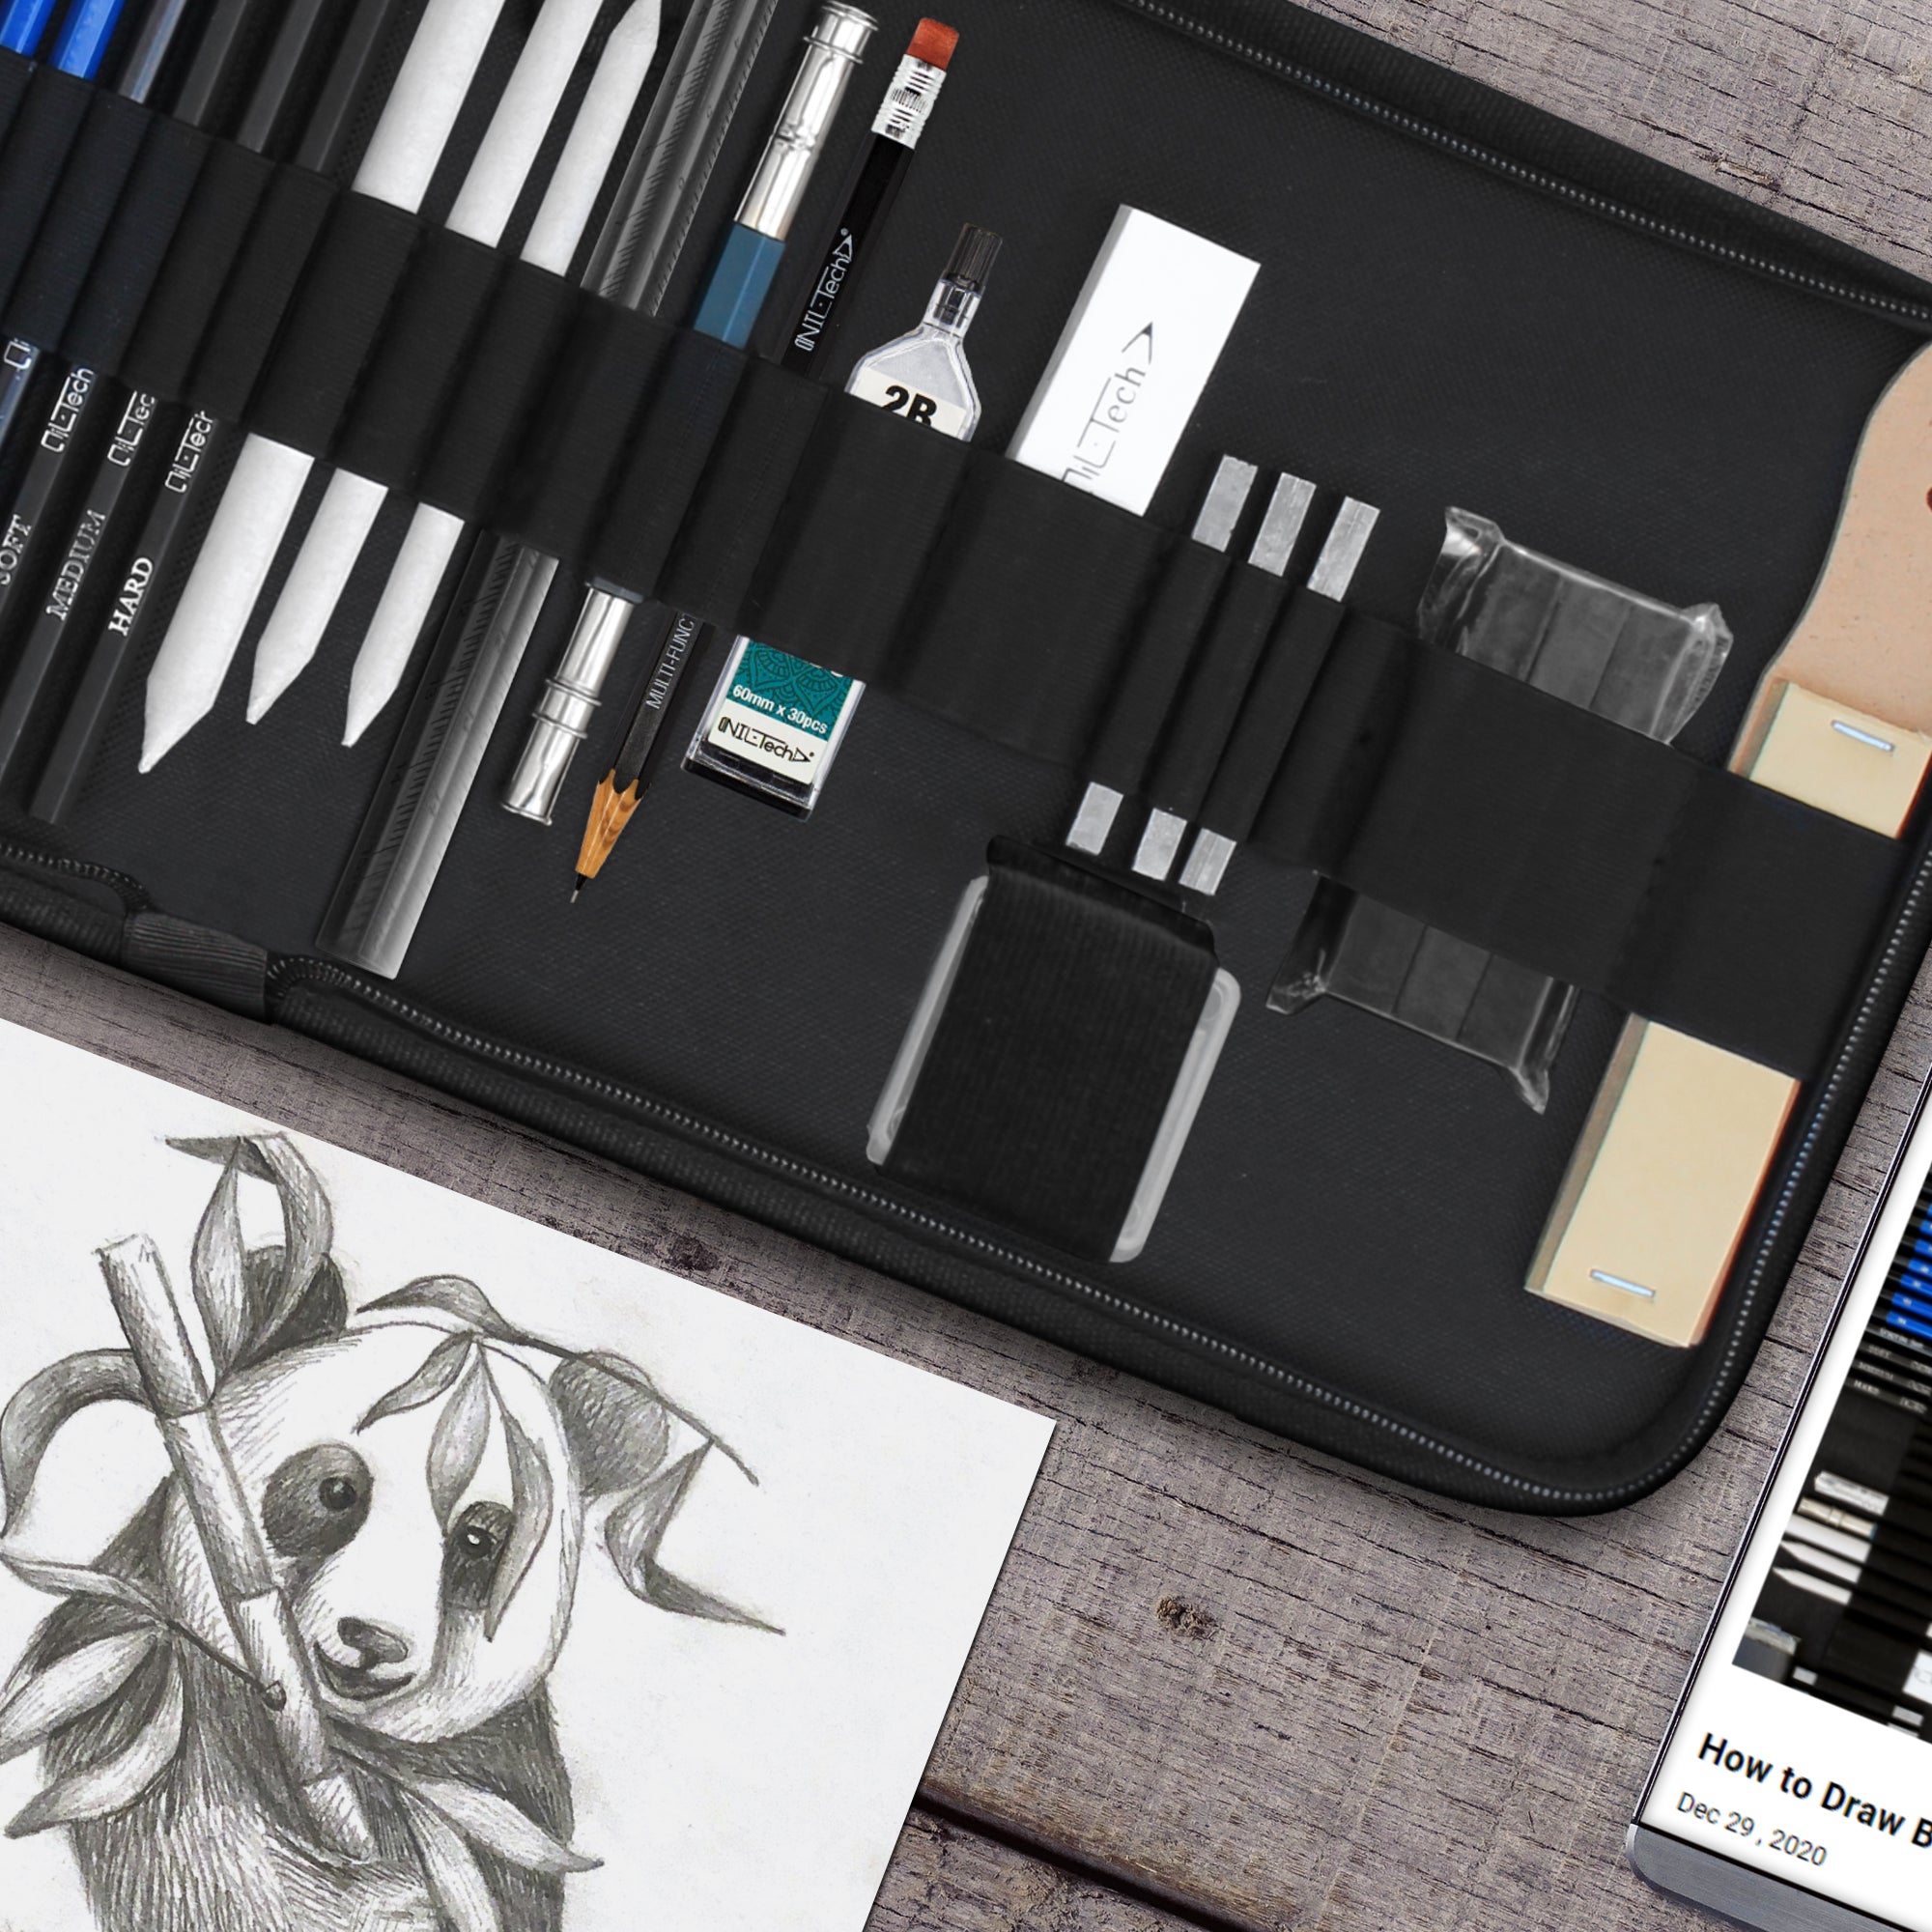 37 Pcs Sketch Pencil Set Professional Sketching Drawing Kit for